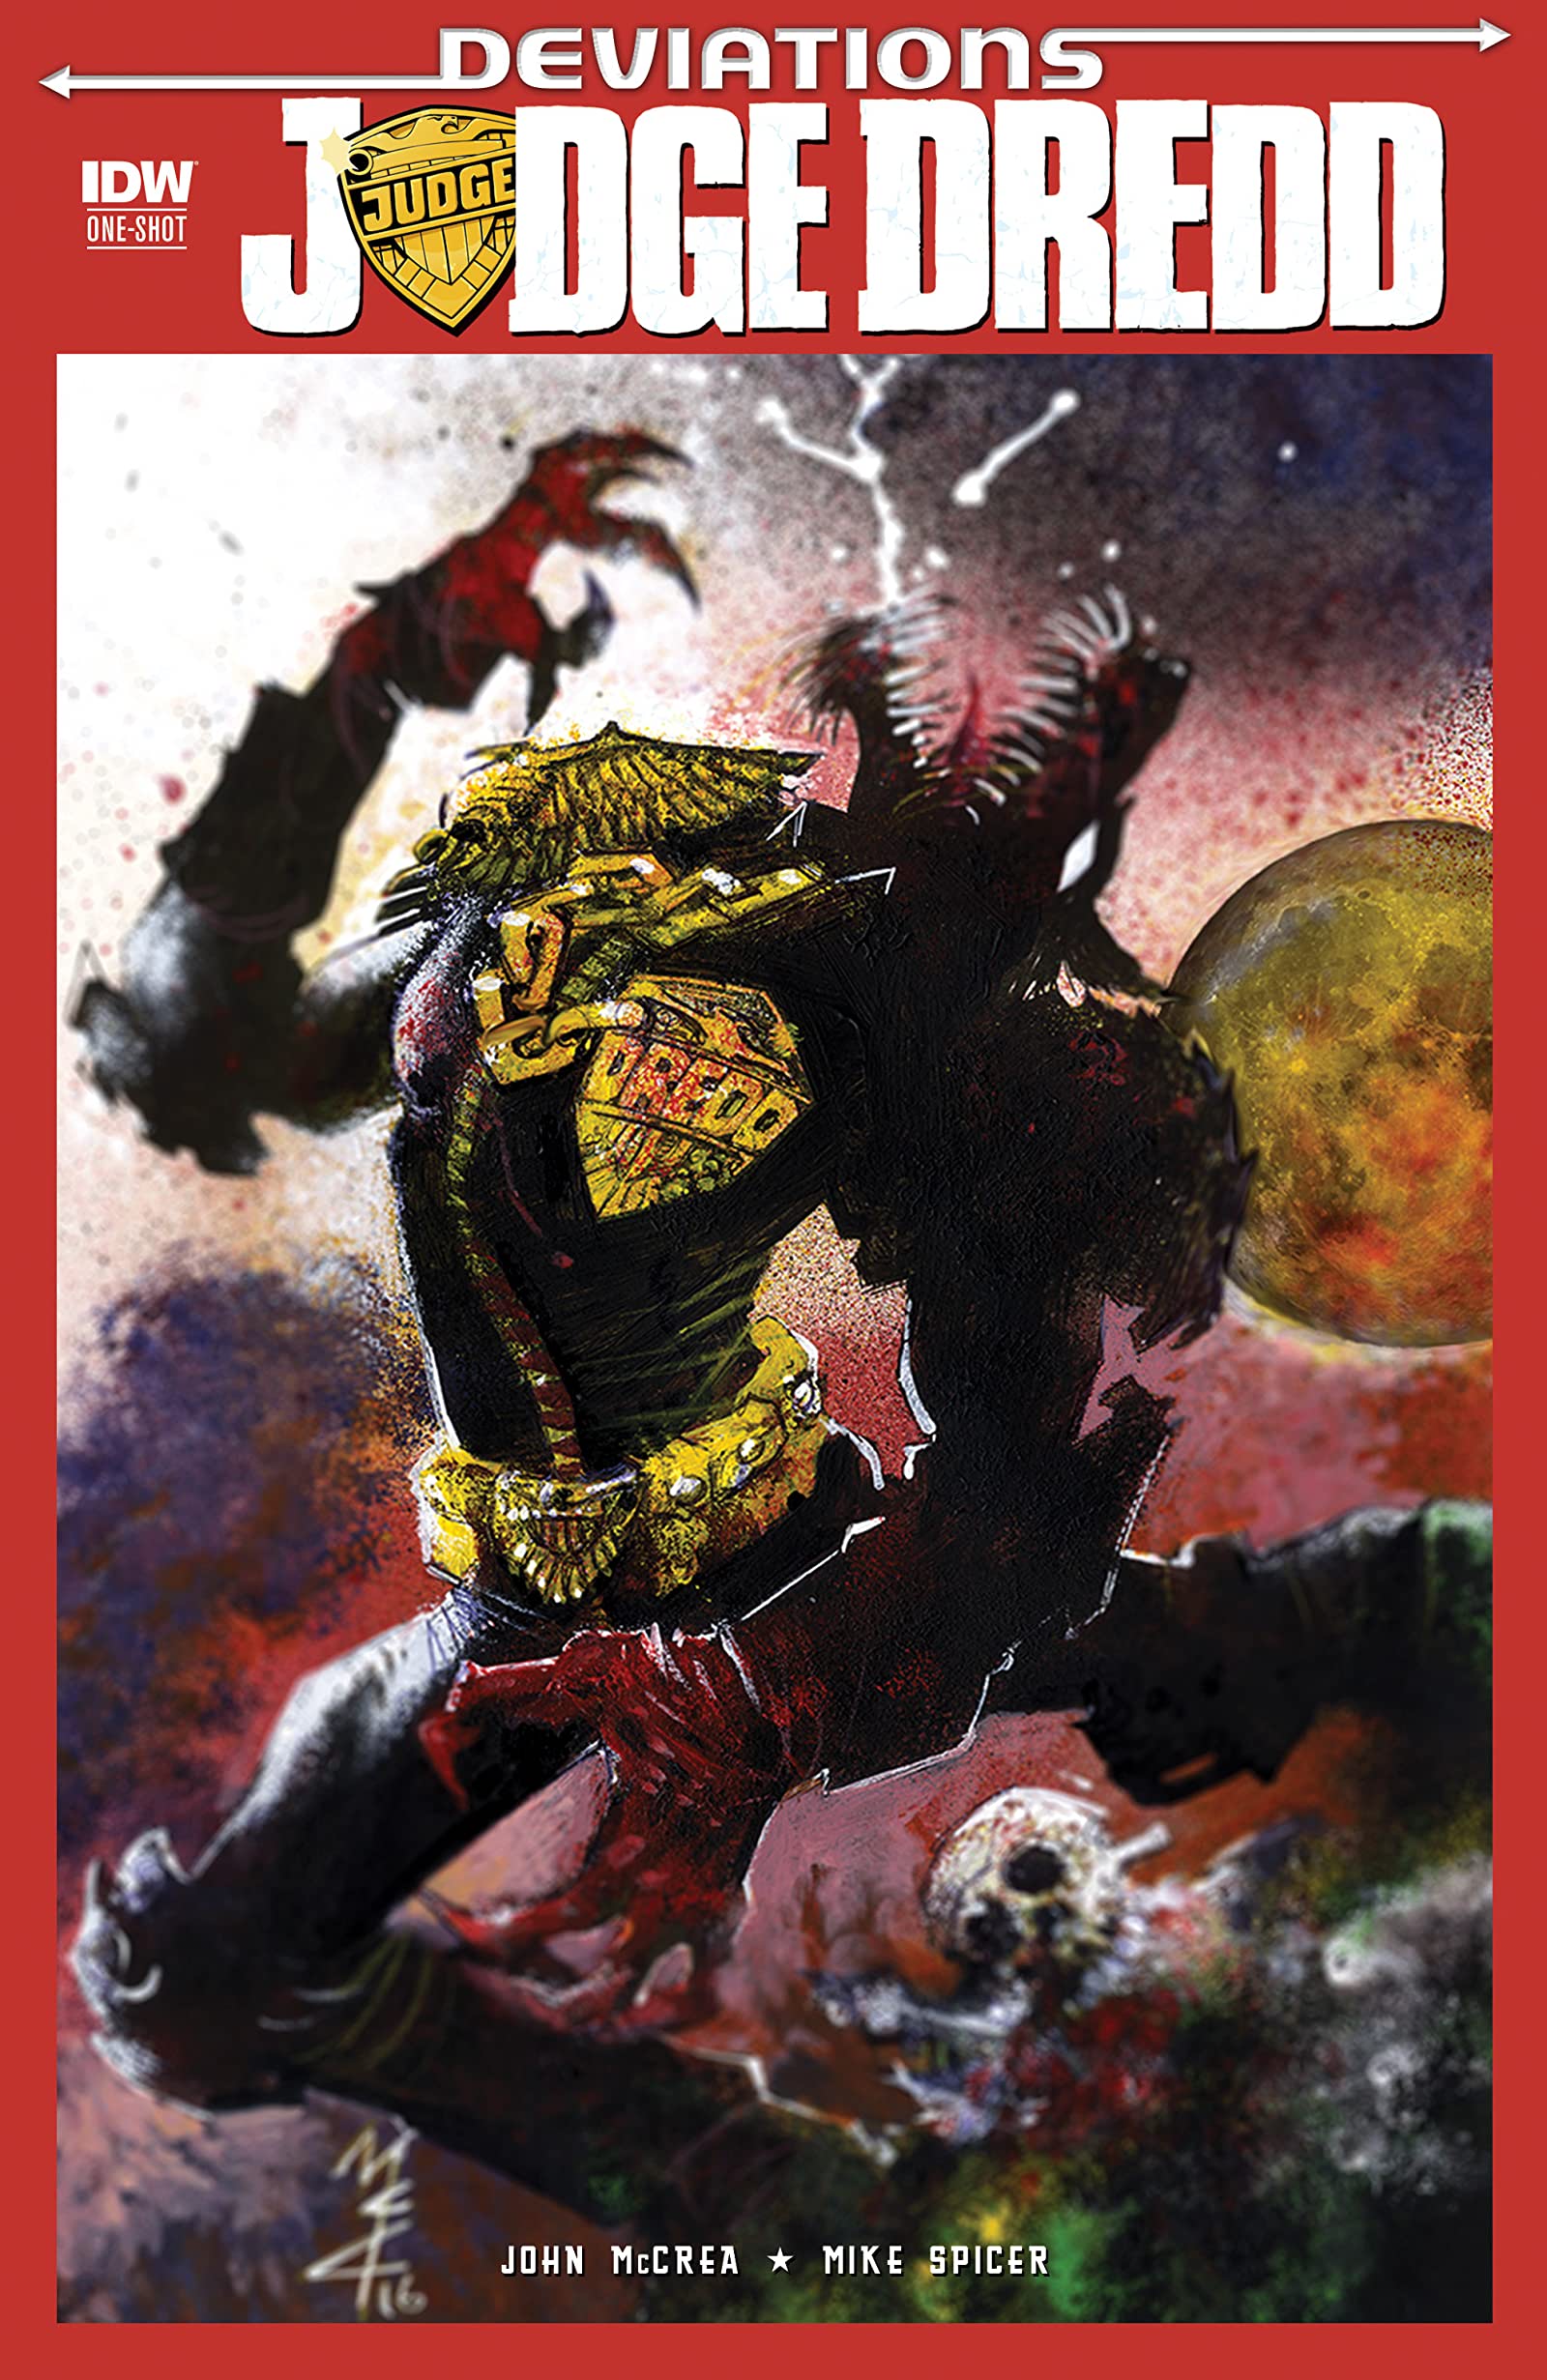 Comic completo Judge Dredd: Deviations